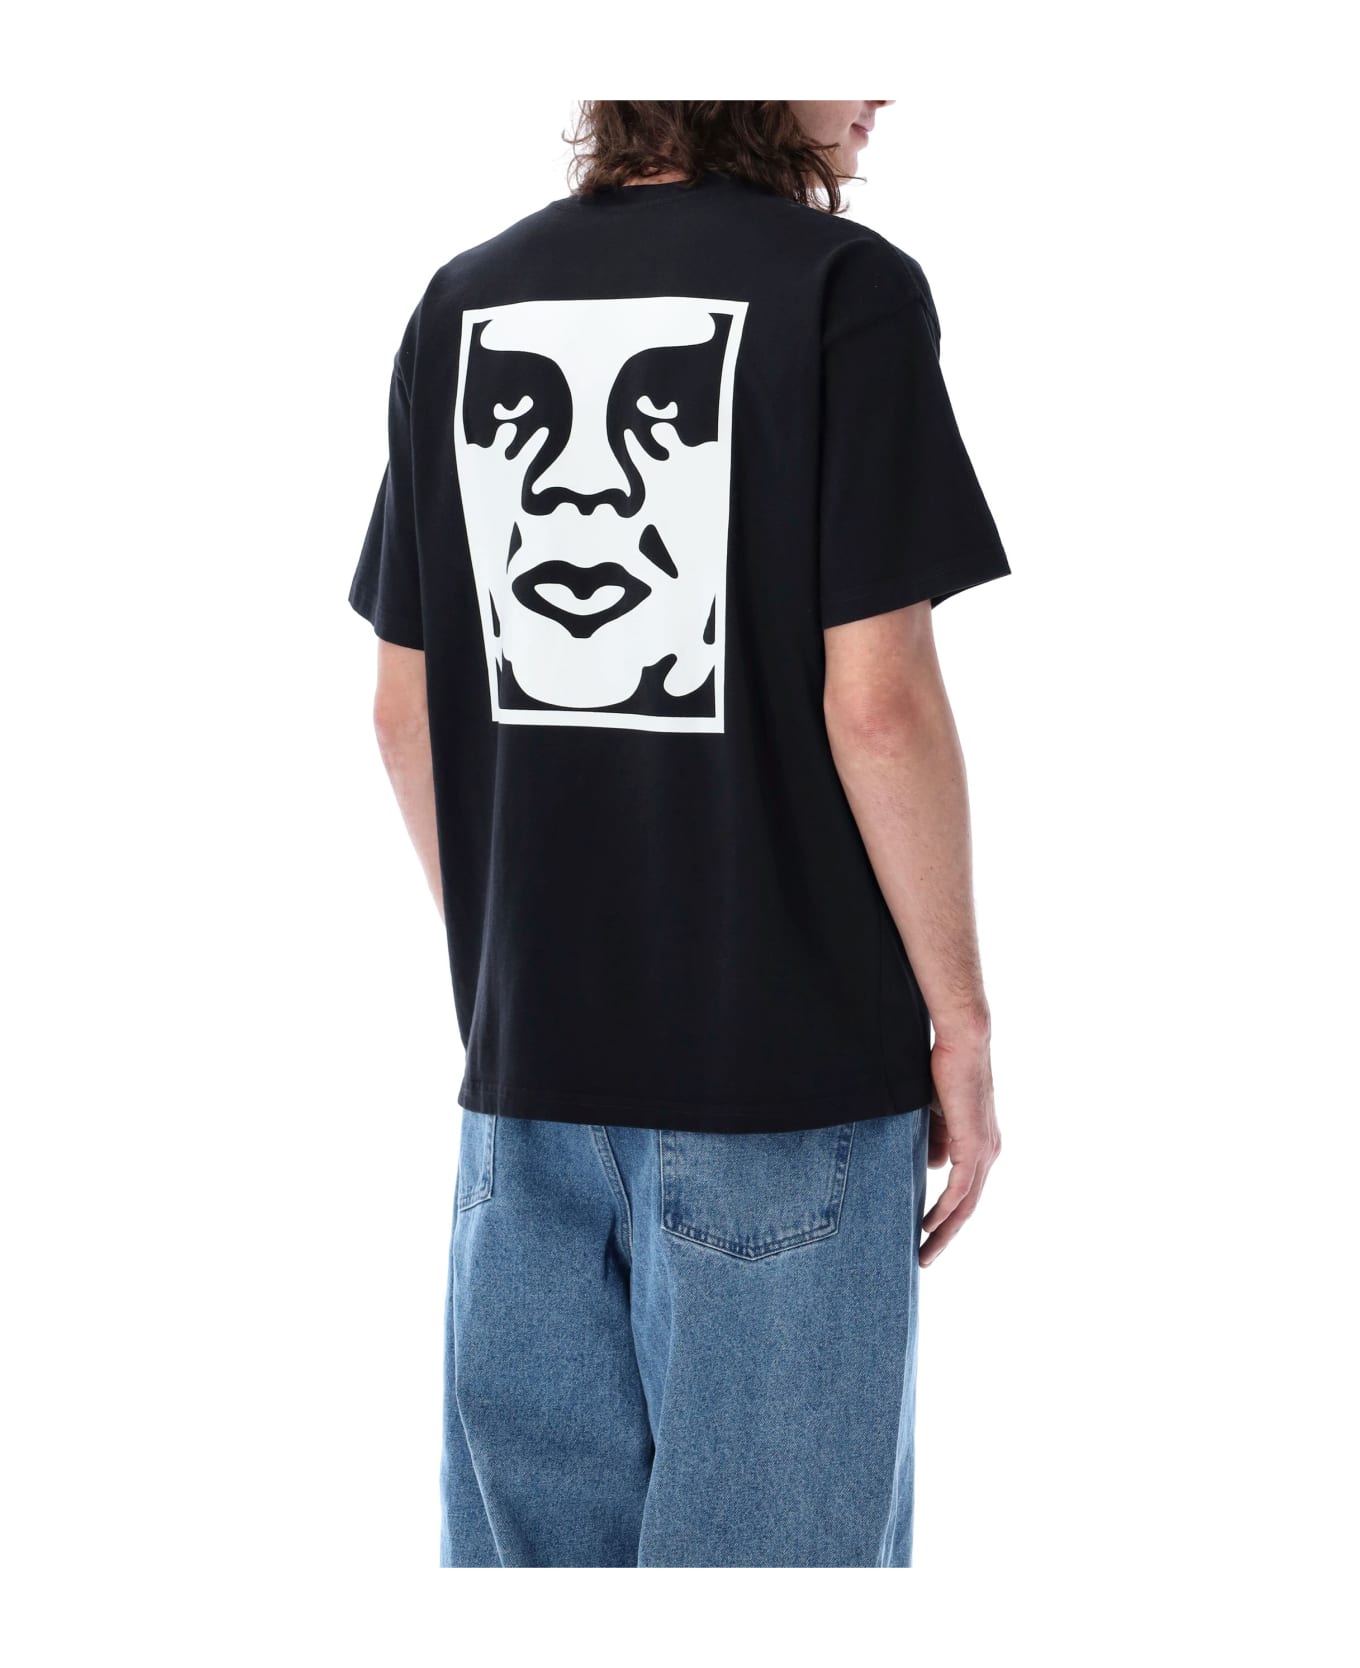 Obey Cotton Bold Icon Heavyweight T-shirt - BLACK シャツ